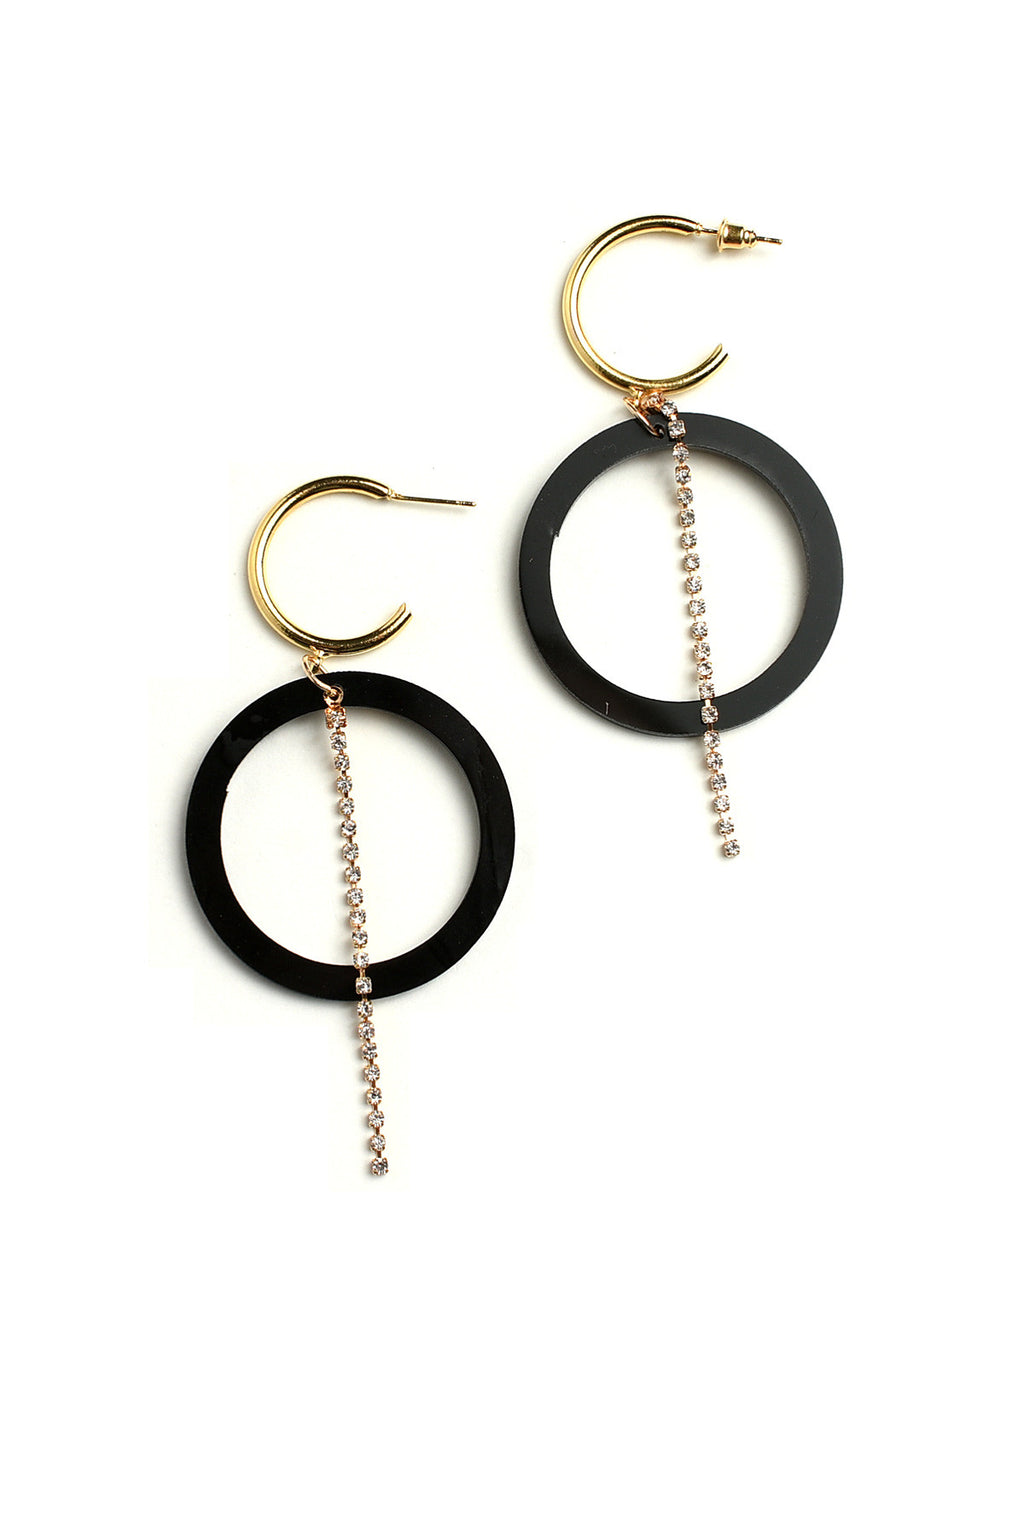 Gold and Black Hoop Stone Design Drop Earrings.